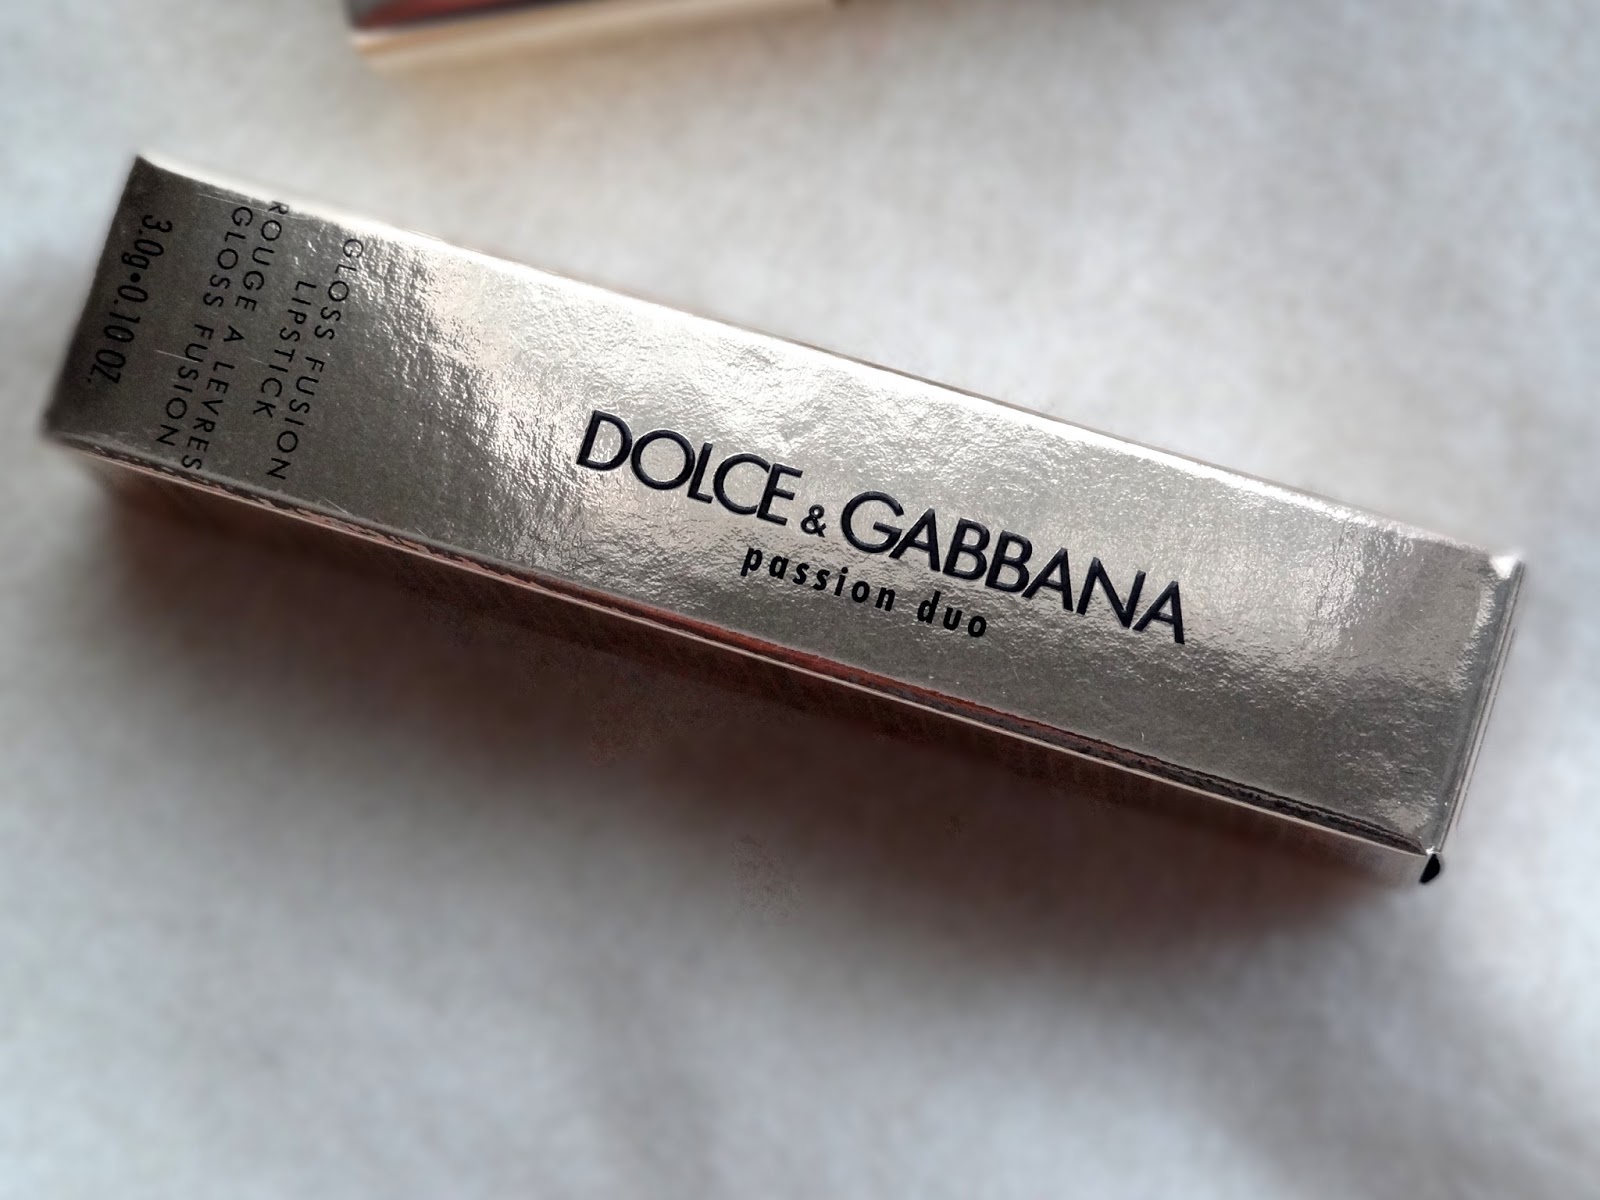 dolce & gabbana passion fusion gloss duo lipstick in 230 iridescent